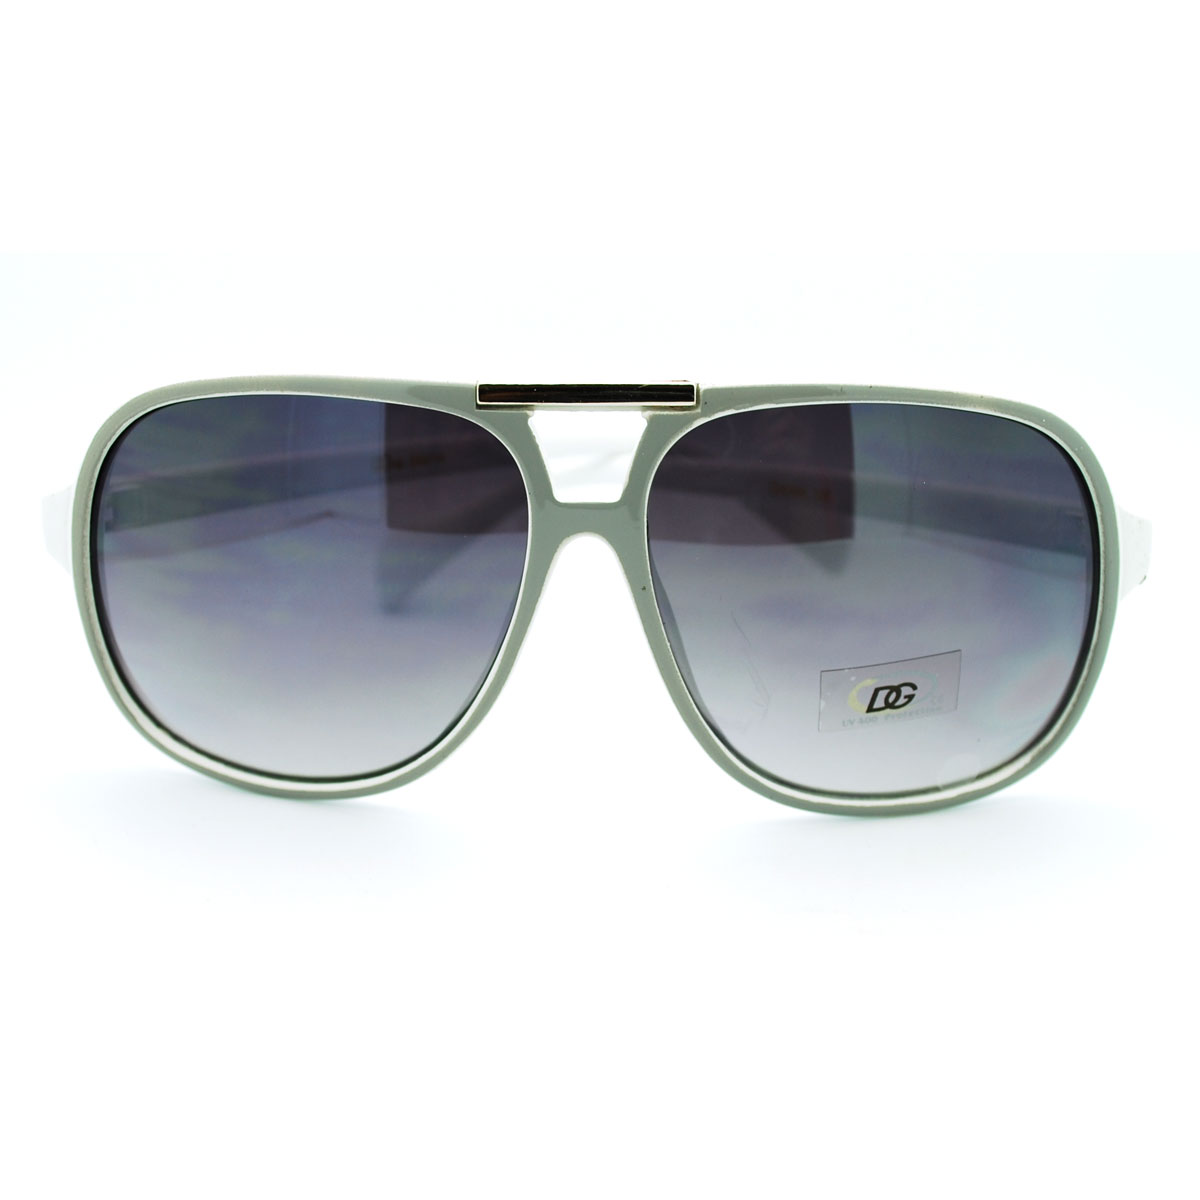 Dg Eyewear 2 Tone Mobster Flat Top Plastic Aviator Sunglasses Ebay